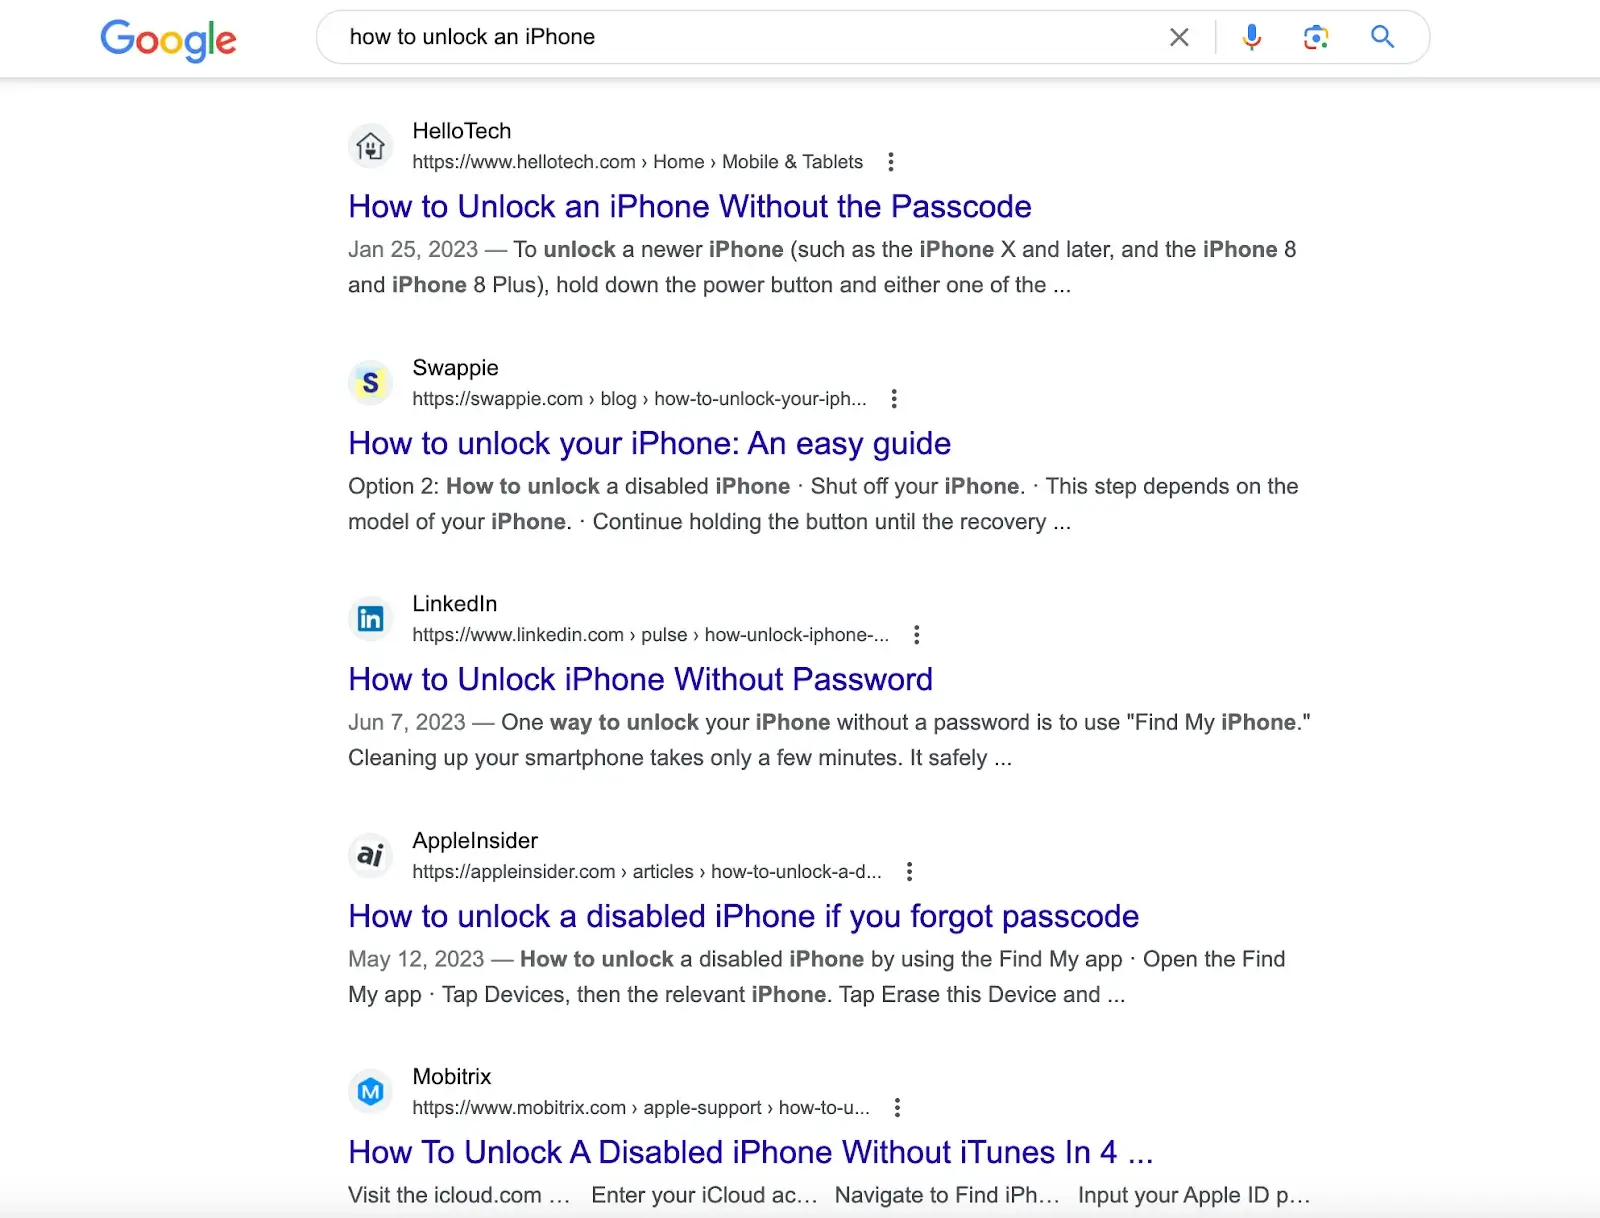 Google How To Unlock an iPhone SERPS